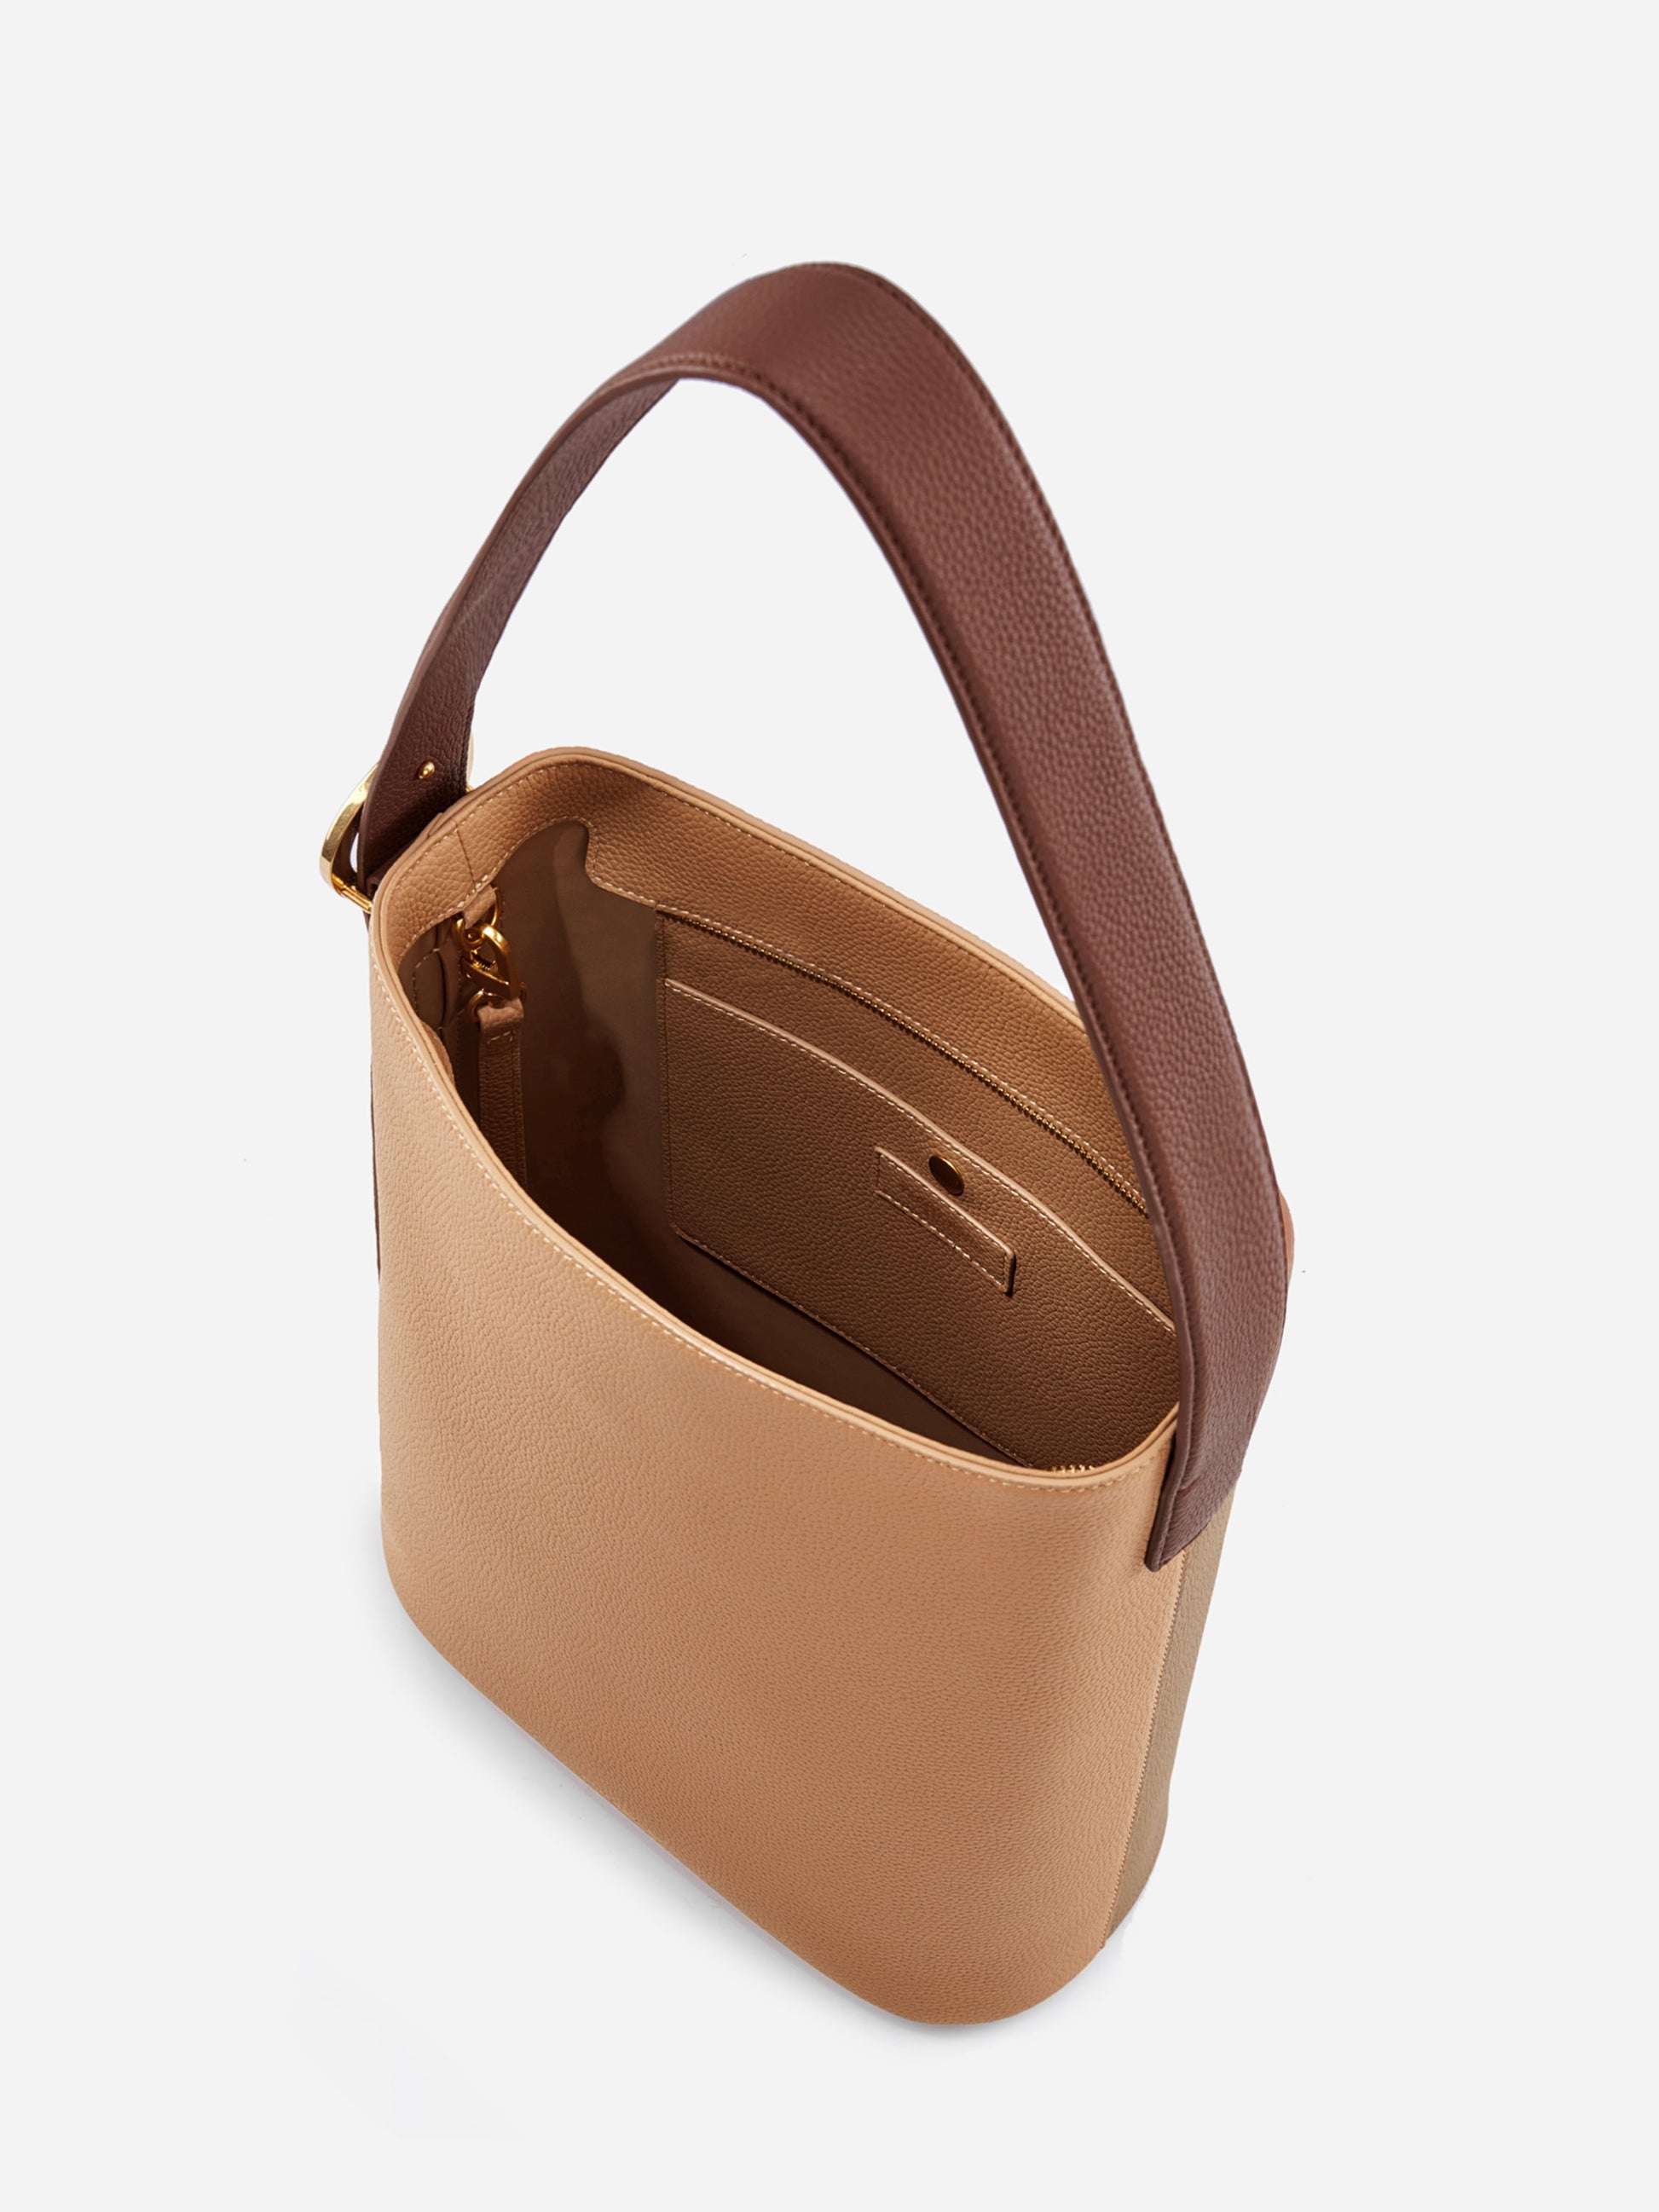 New Handbag Unboxing & What Fits Inside - Celine Mini Vertical Cabas H